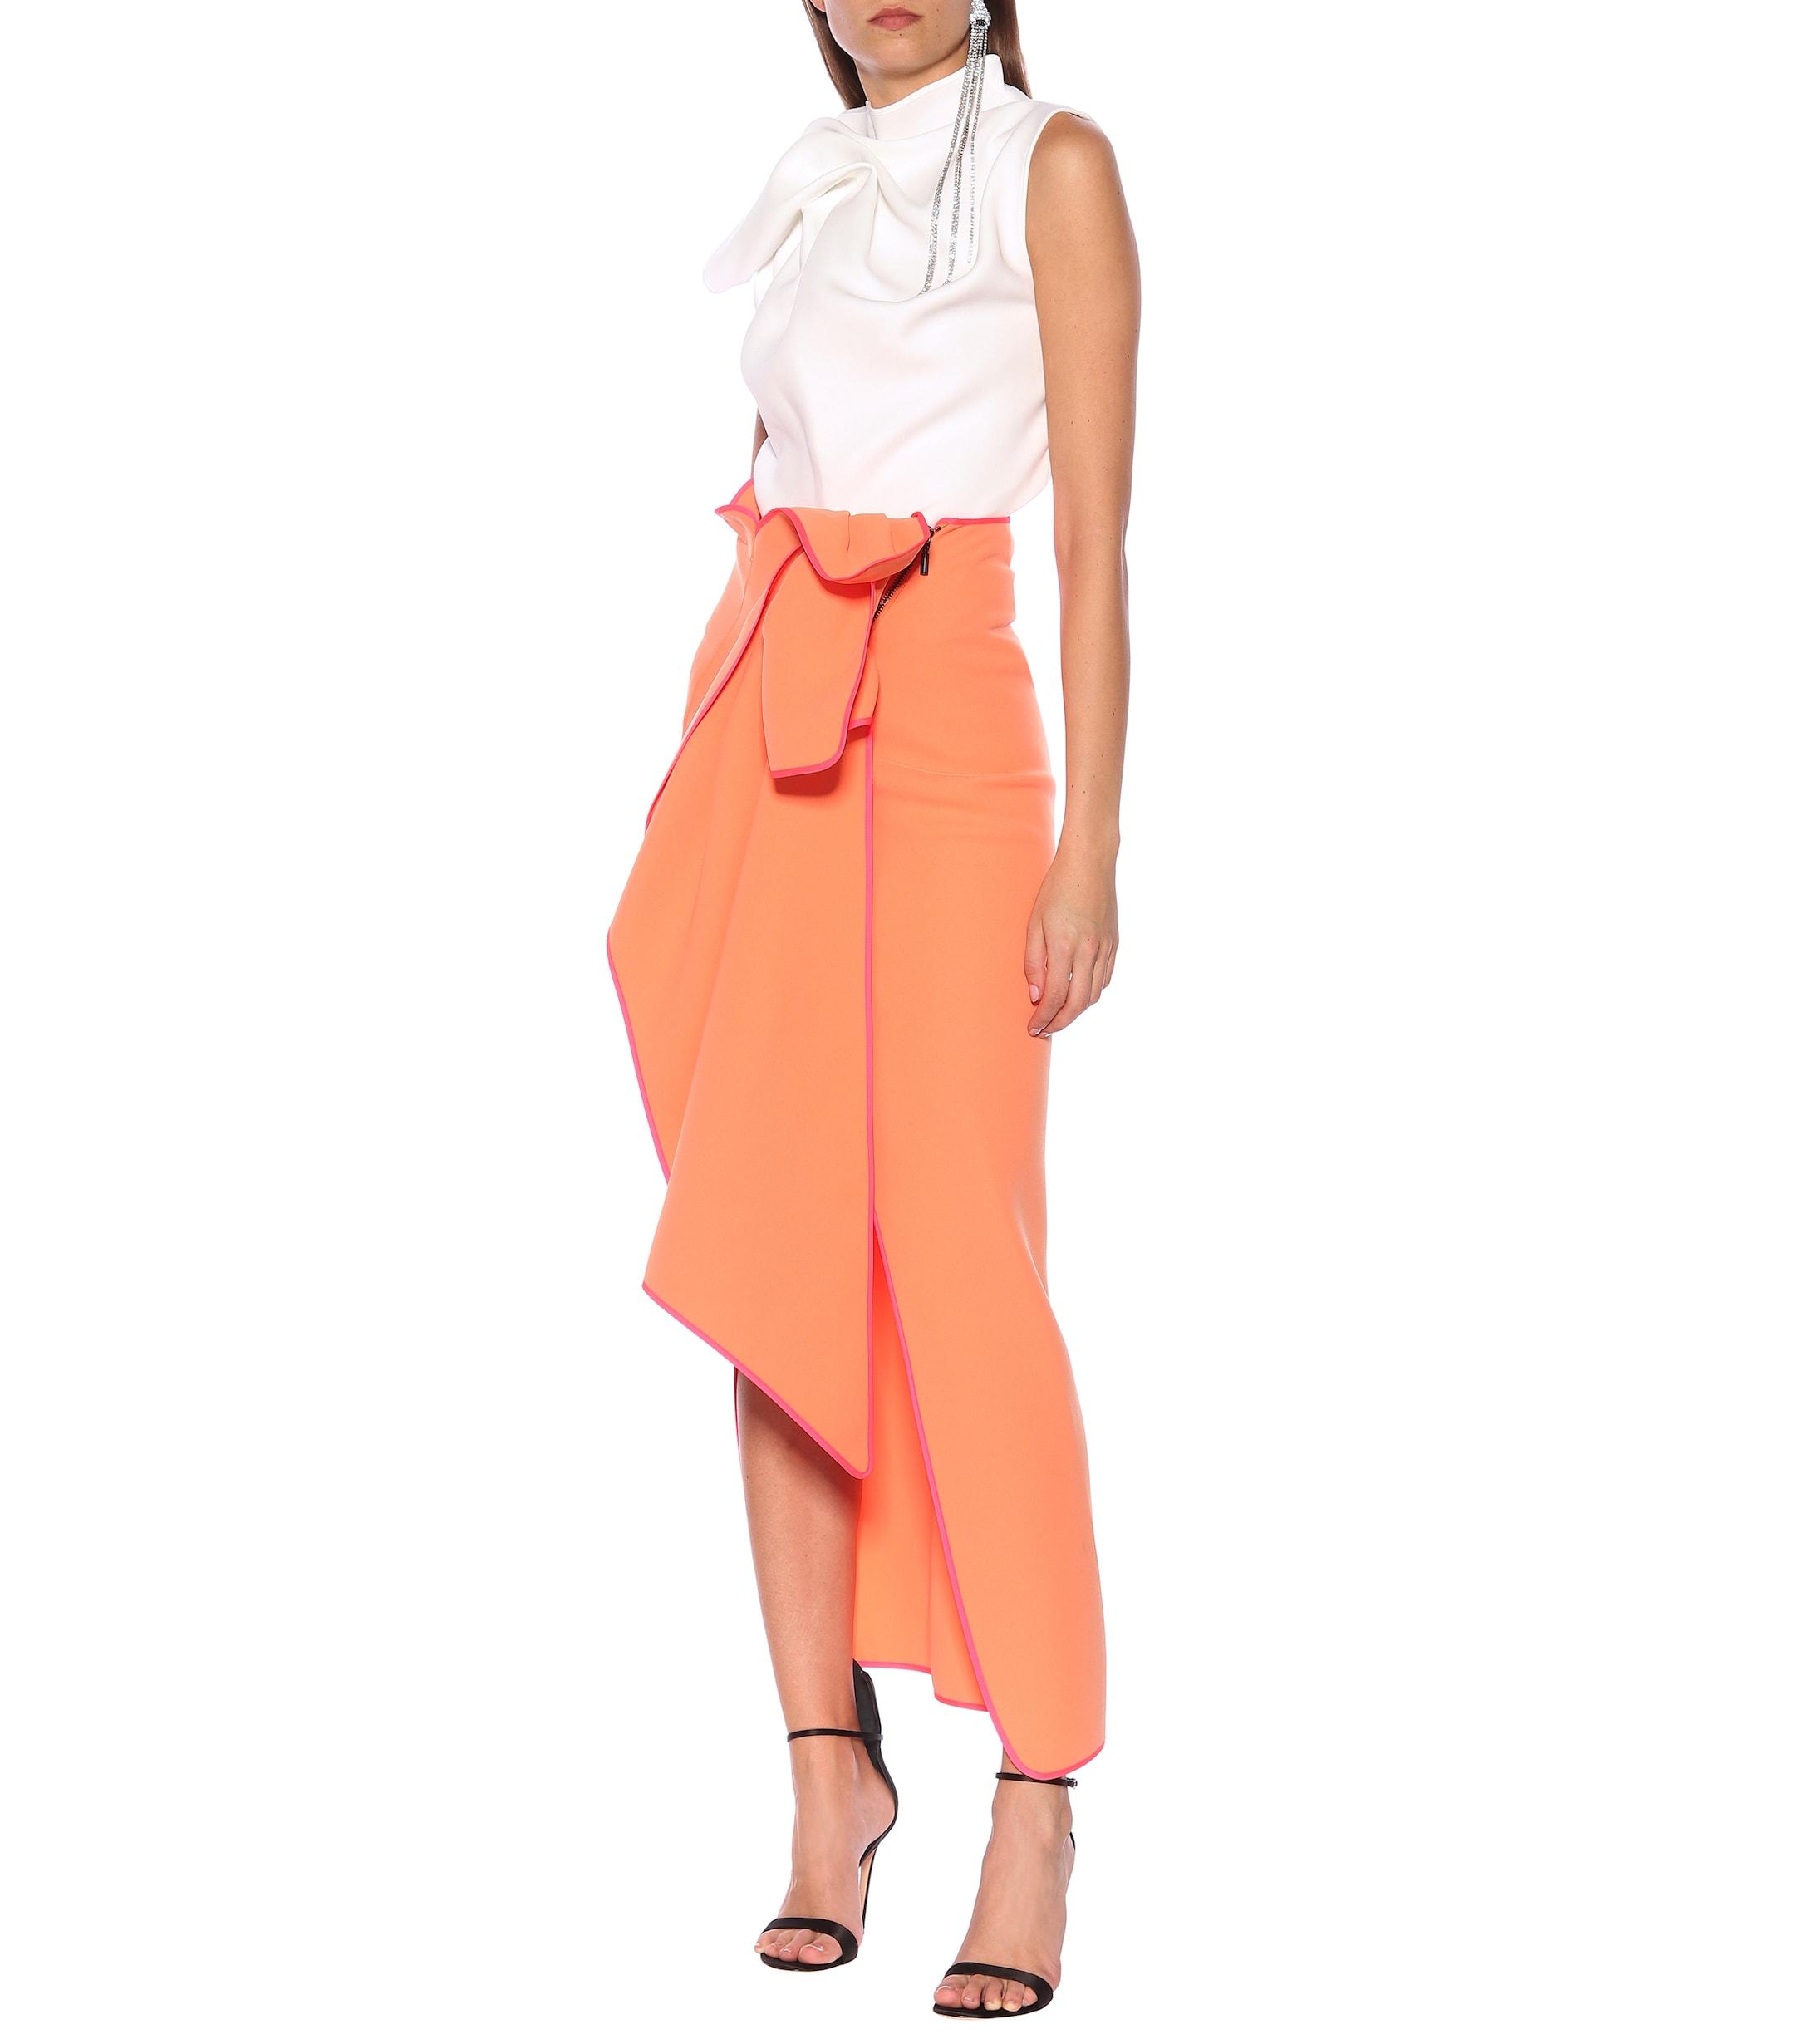 Maticevski Ephemeral Maxi Skirt in Coral (Orange) - Lyst